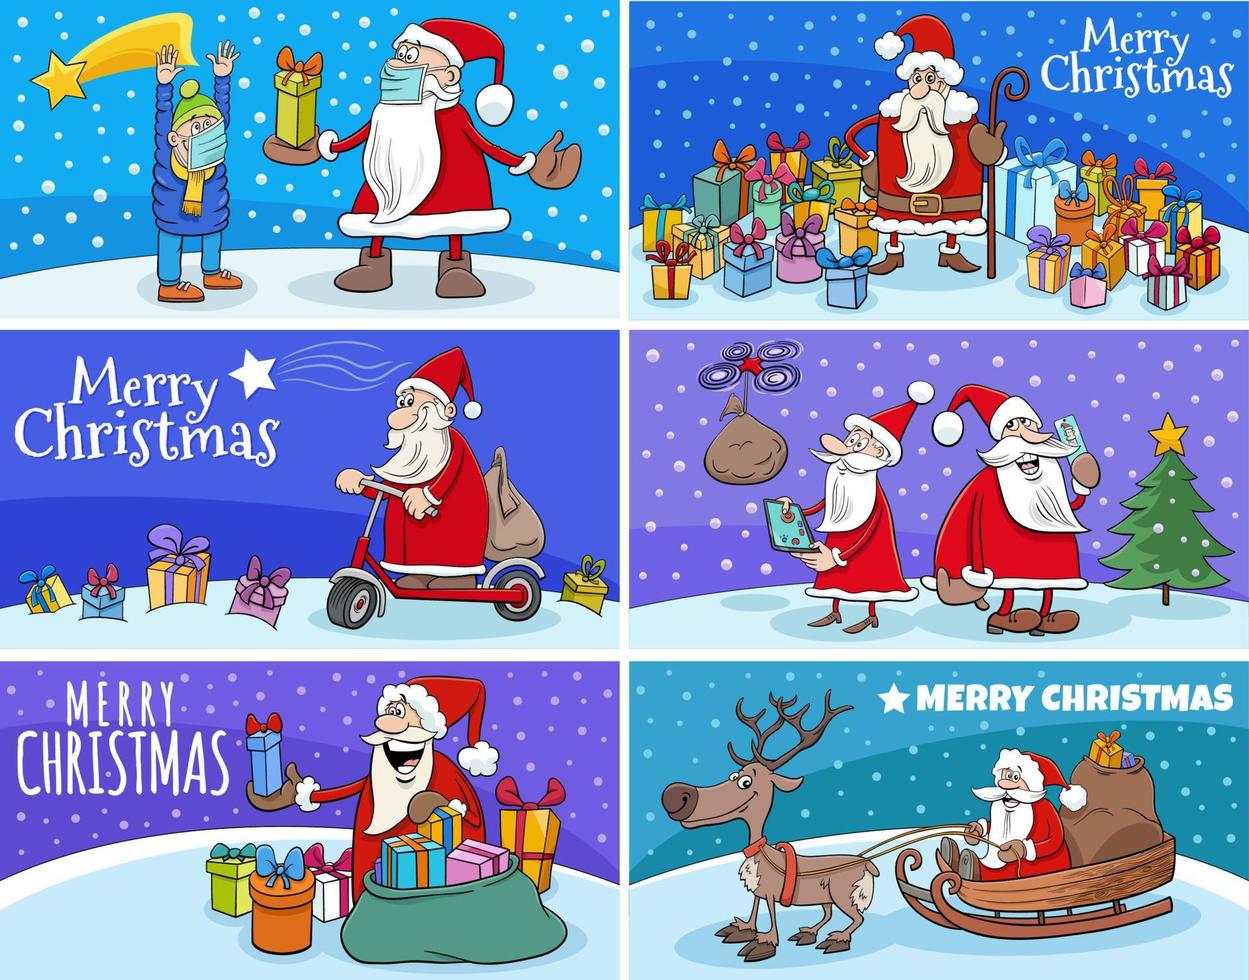 Christmas greeting cards set with cartoon Santa Claus characters vector